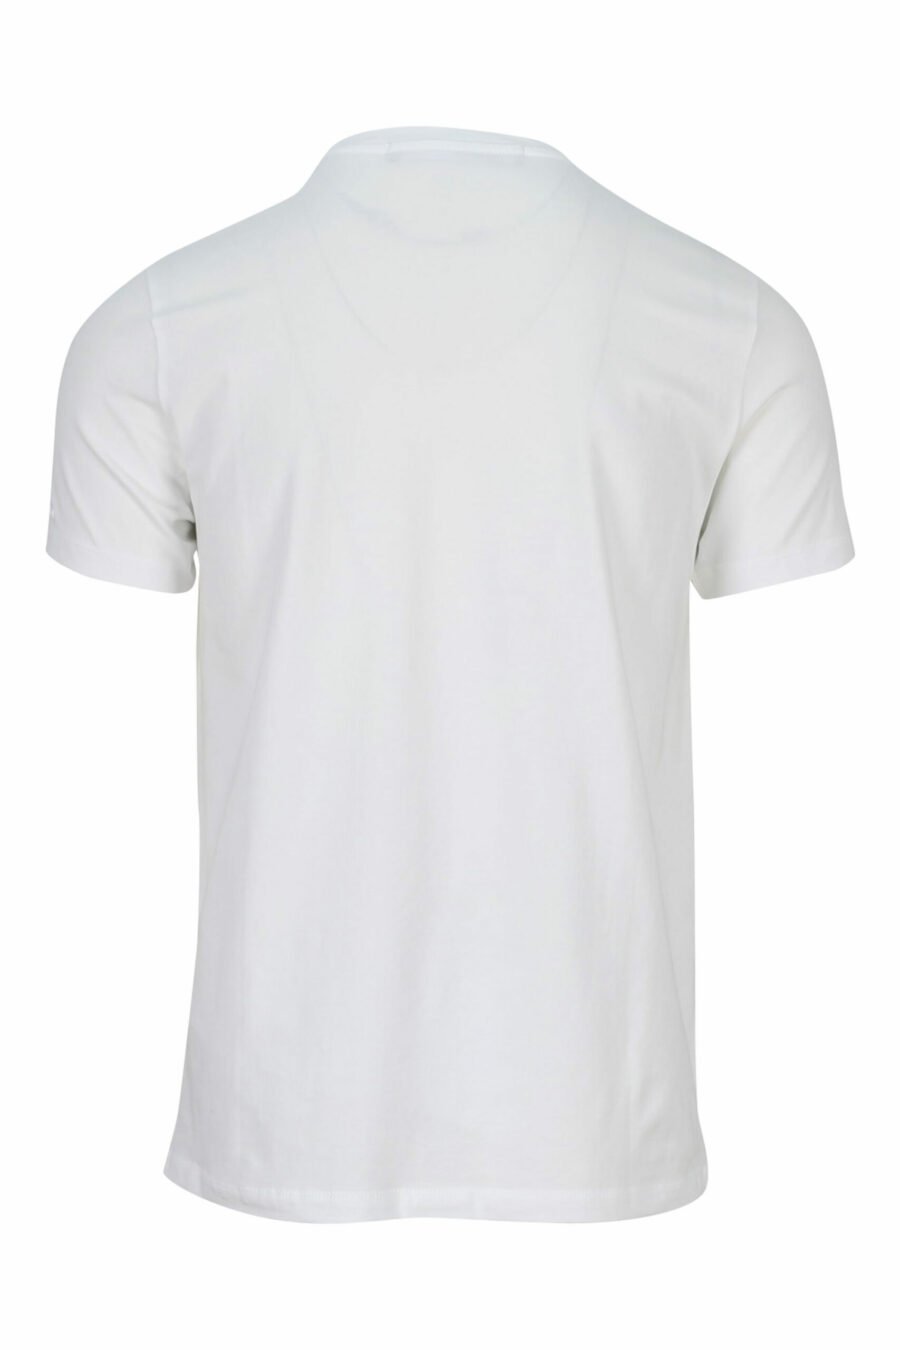 T-shirt branca com maxilogo "karl silhouette" multicolorido - 4062226400701 scaled